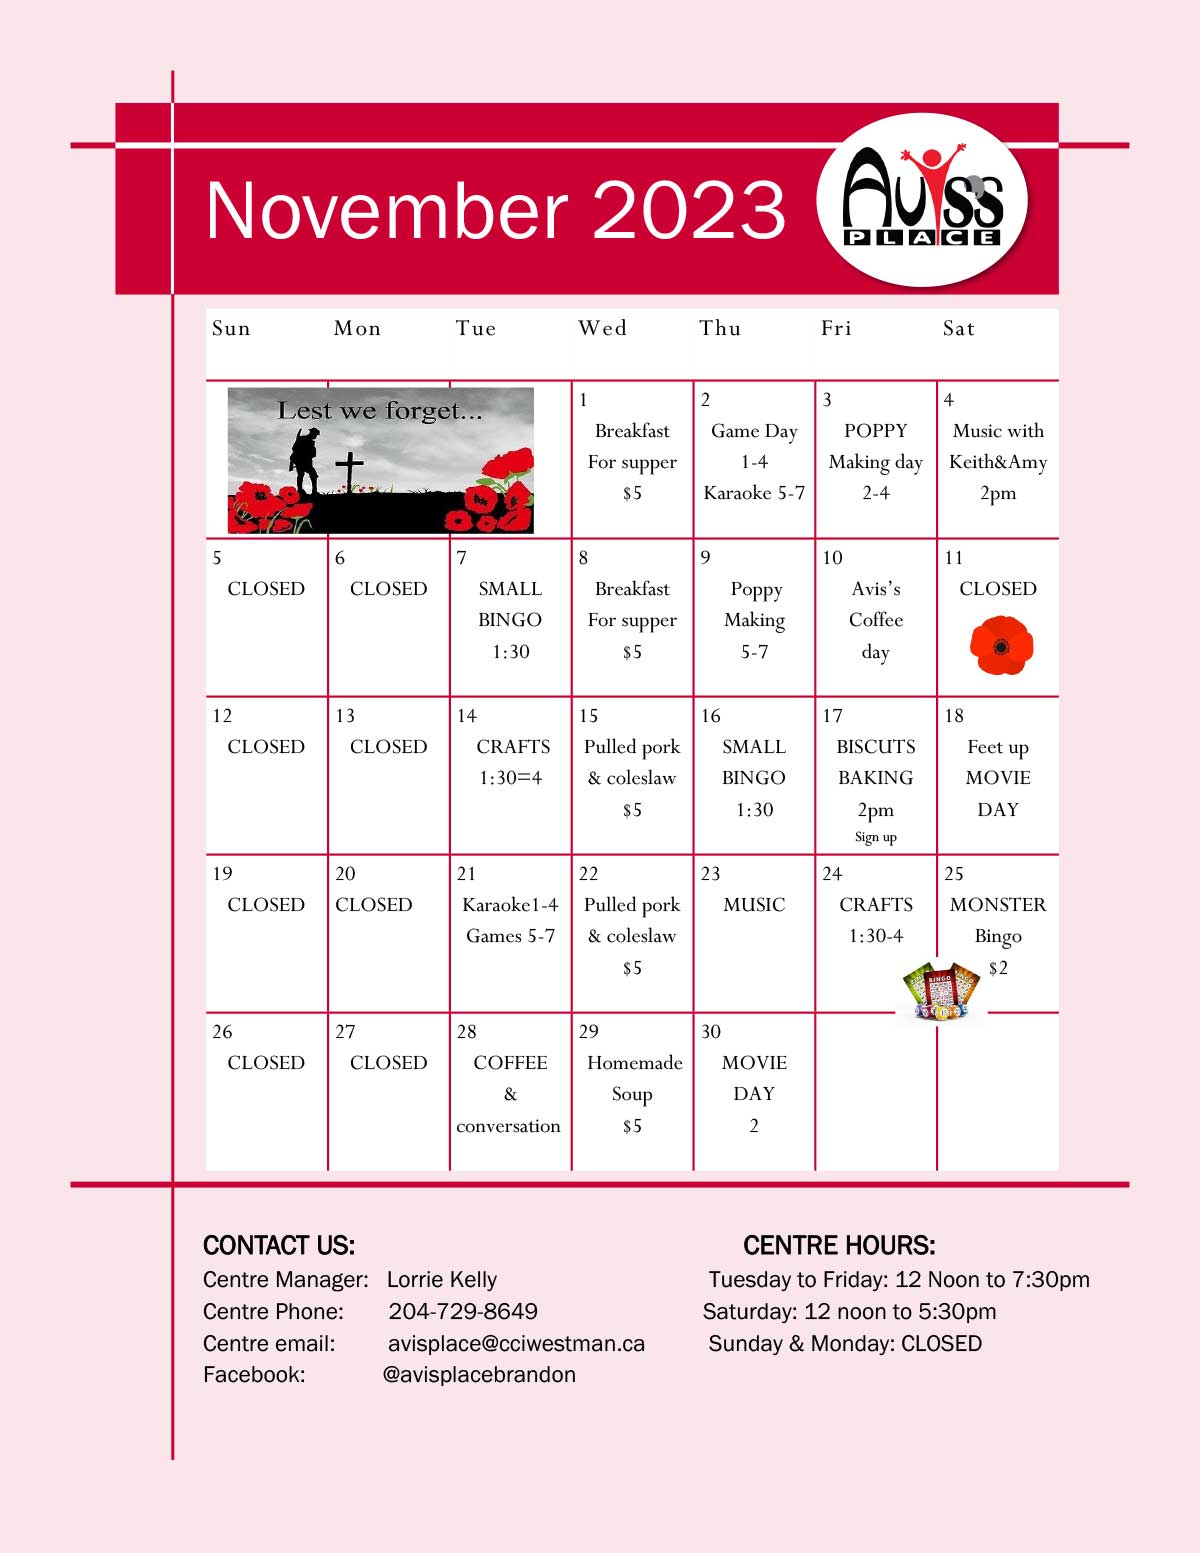 November 2023 Events Calendar